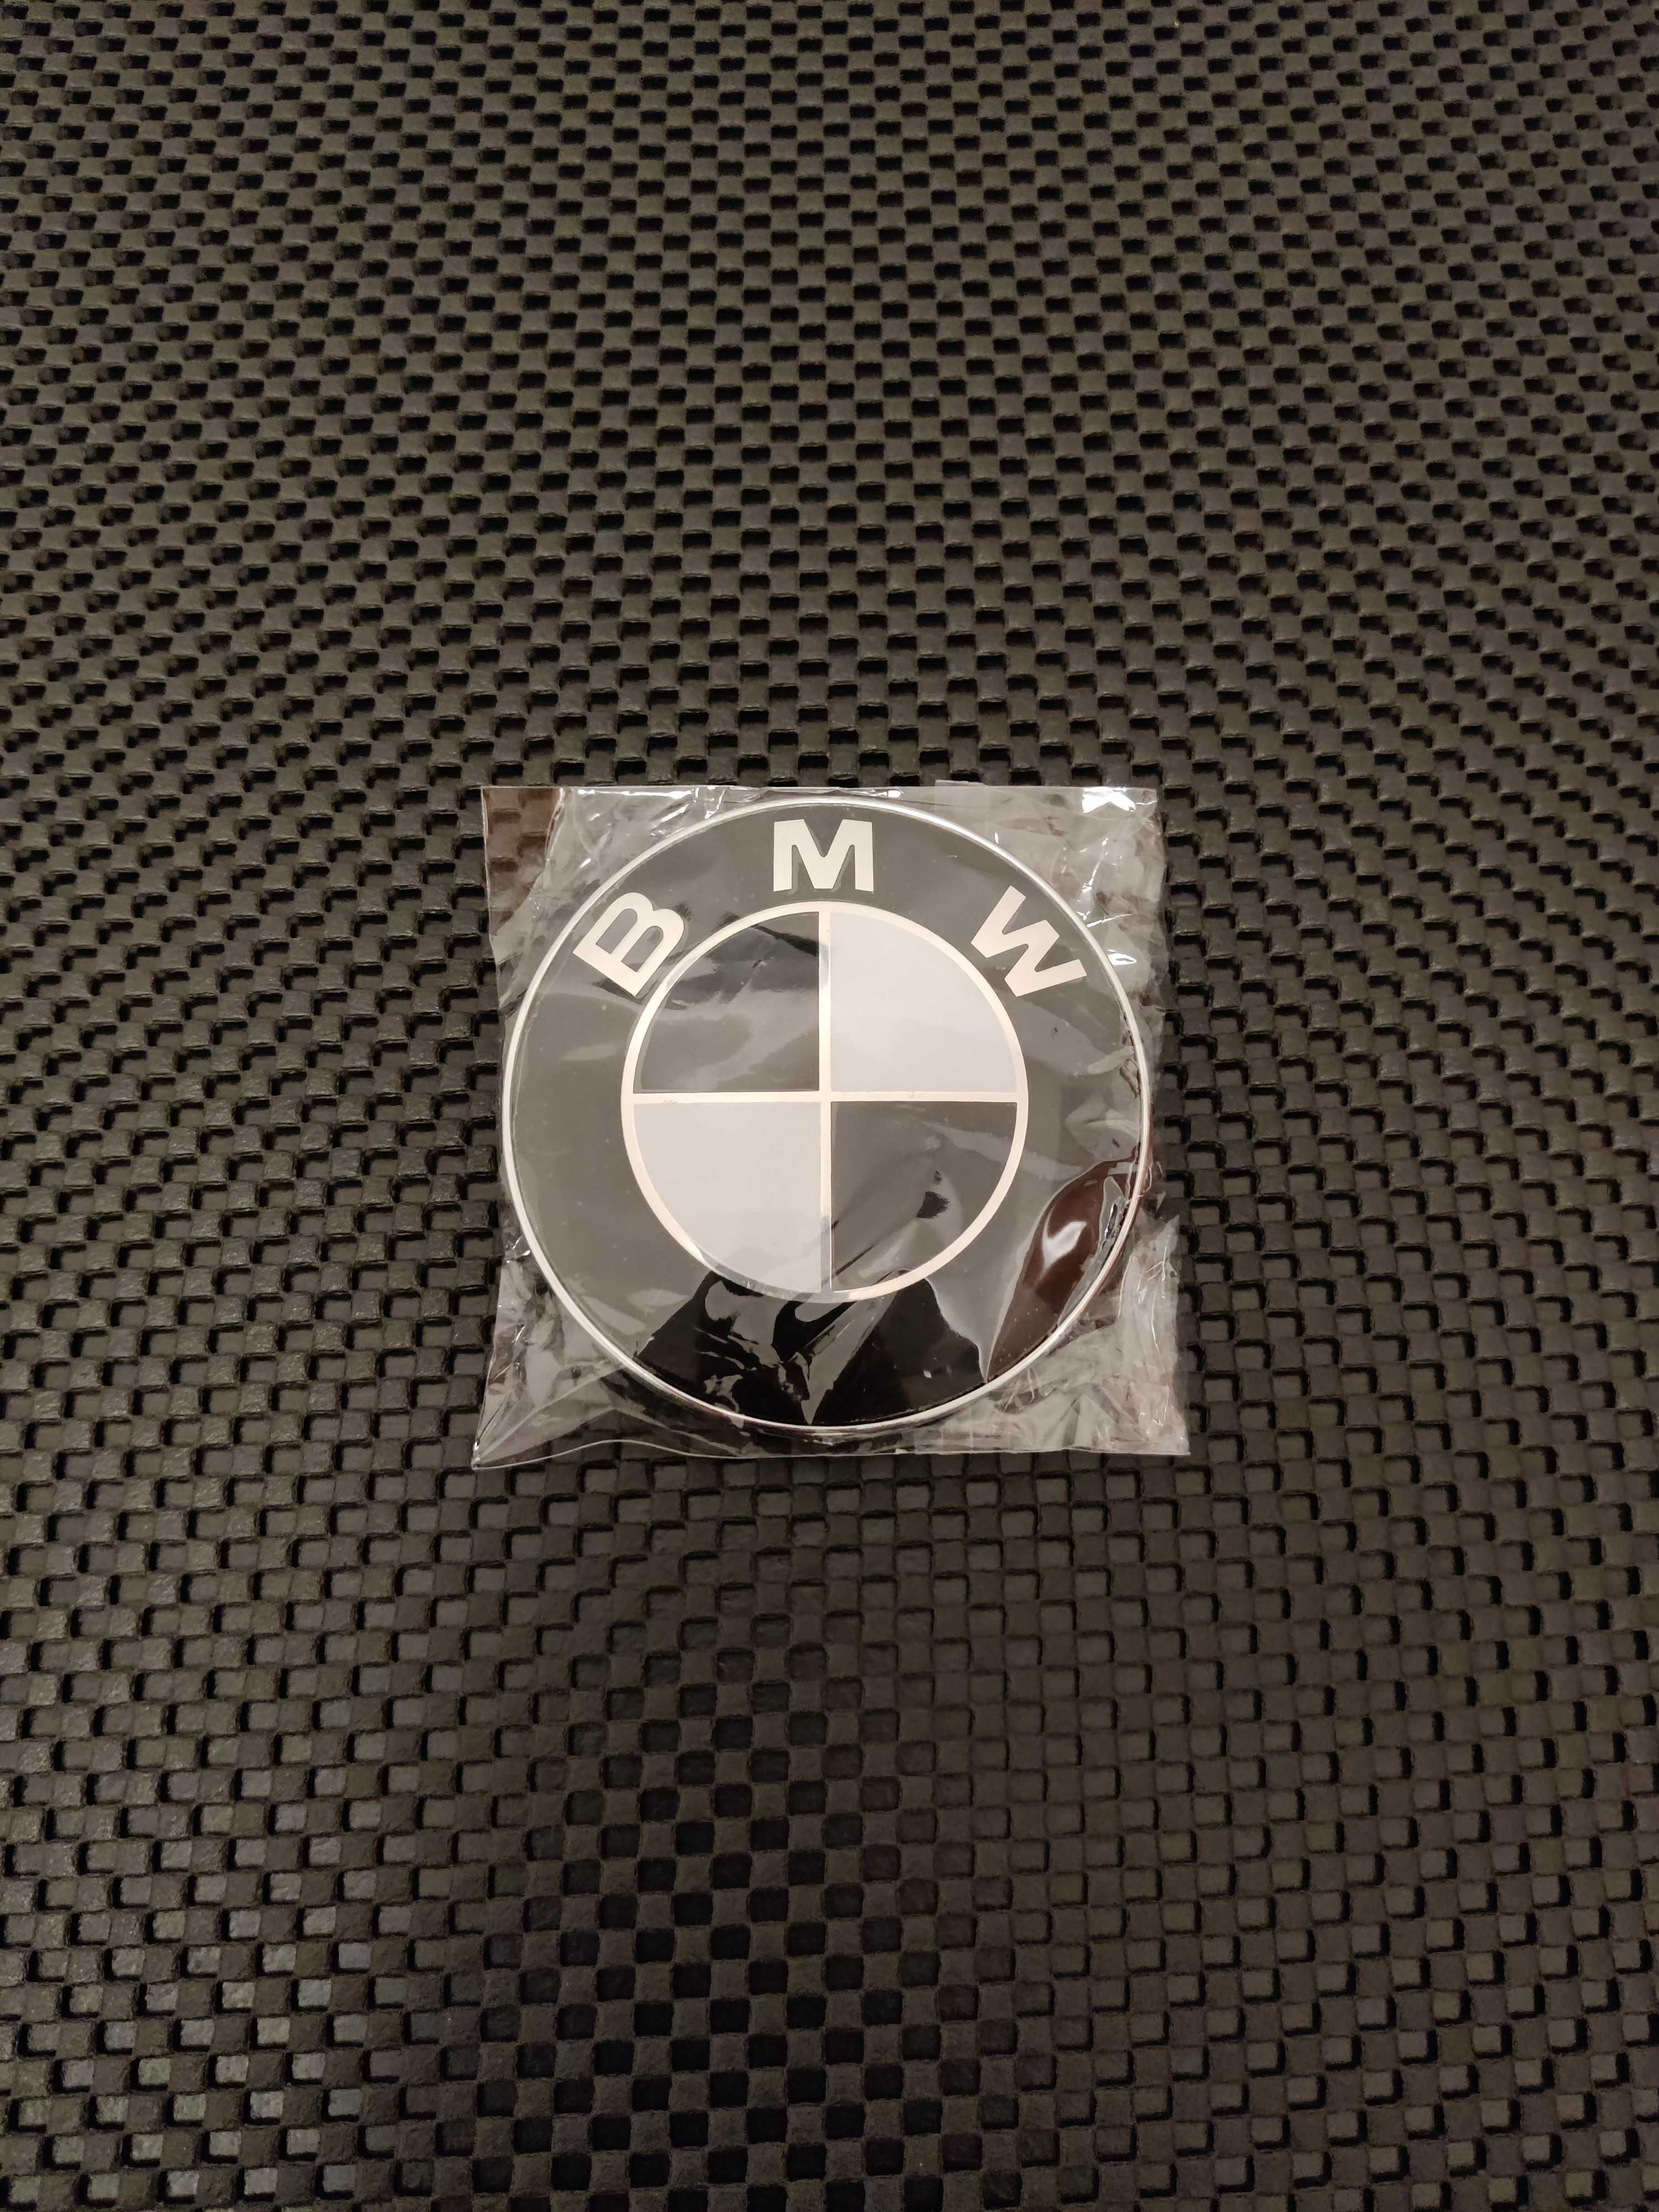 Emblema Logo BMW 82 mm si 74 mm NOUA51148132375  51148219237

Foarte b